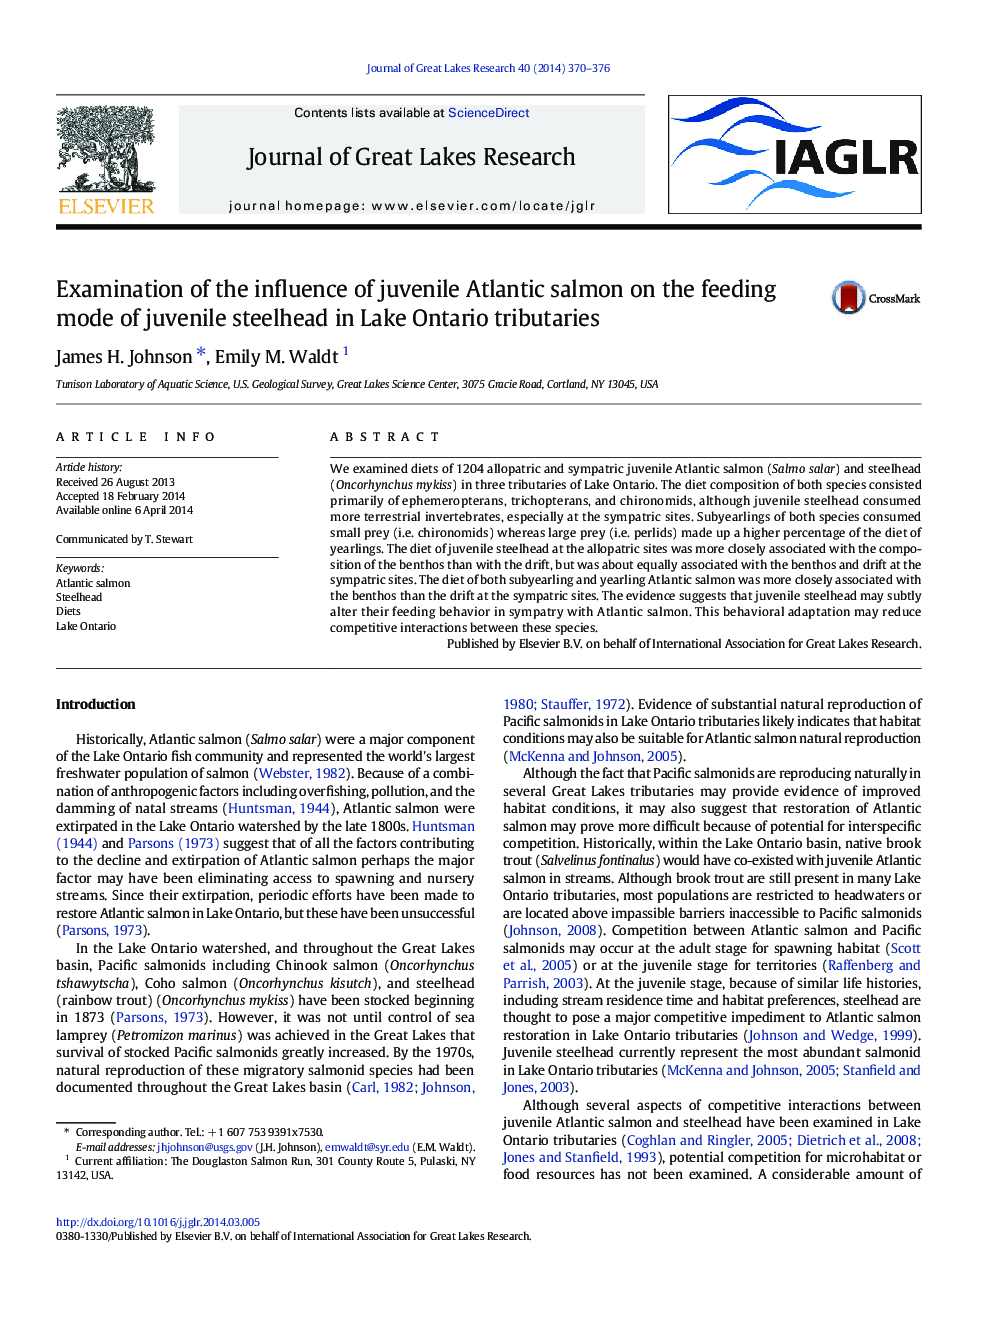 Examination of the influence of juvenile Atlantic salmon on the feeding mode of juvenile steelhead in Lake Ontario tributaries